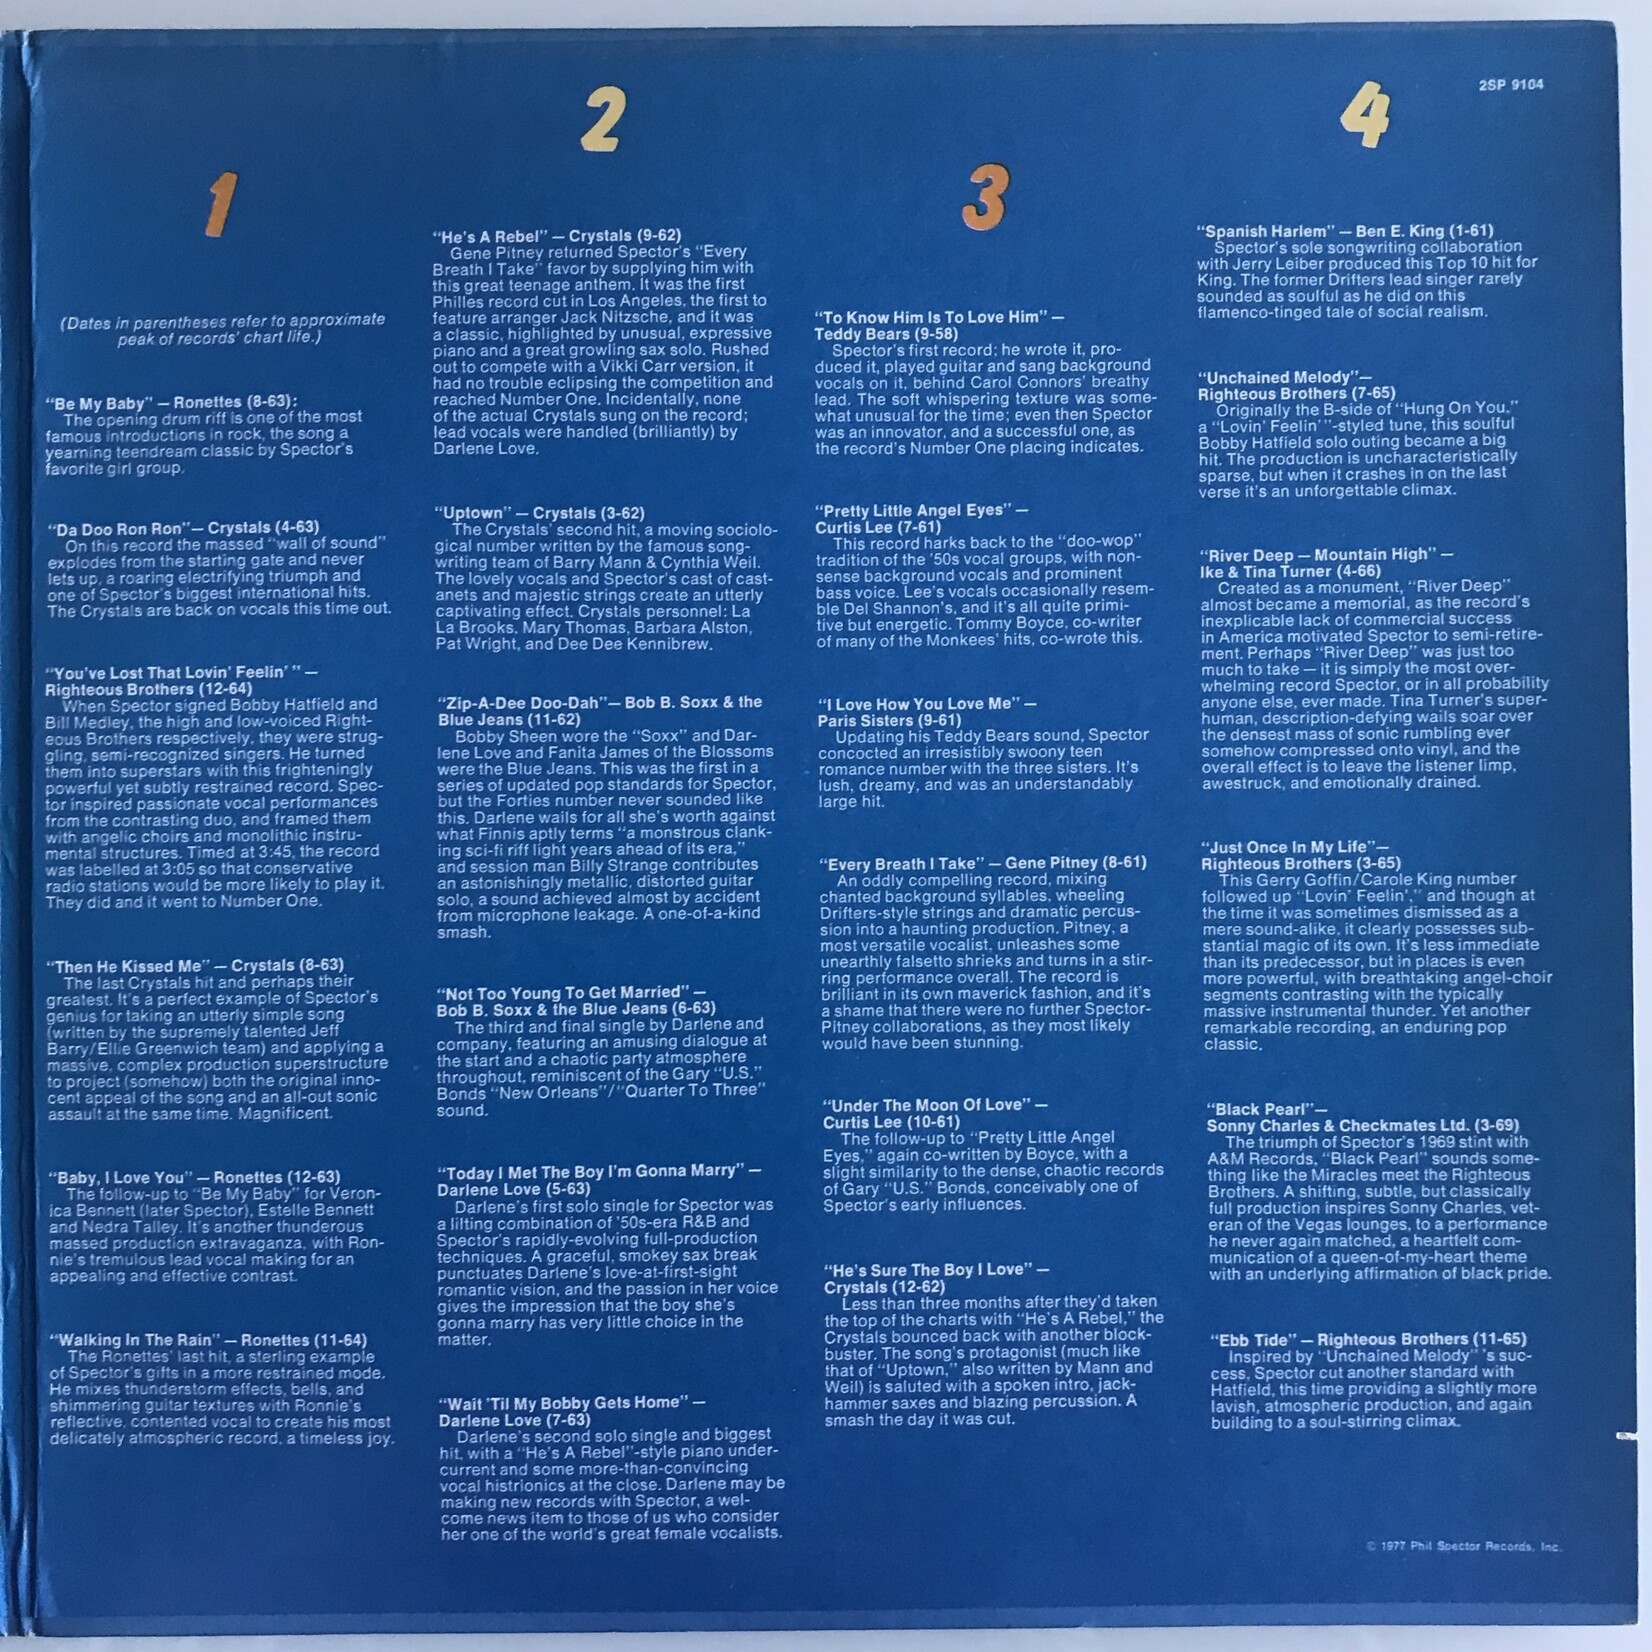 Various - Phil Spector’s Greatest Hits - Vinyl LP (USED)